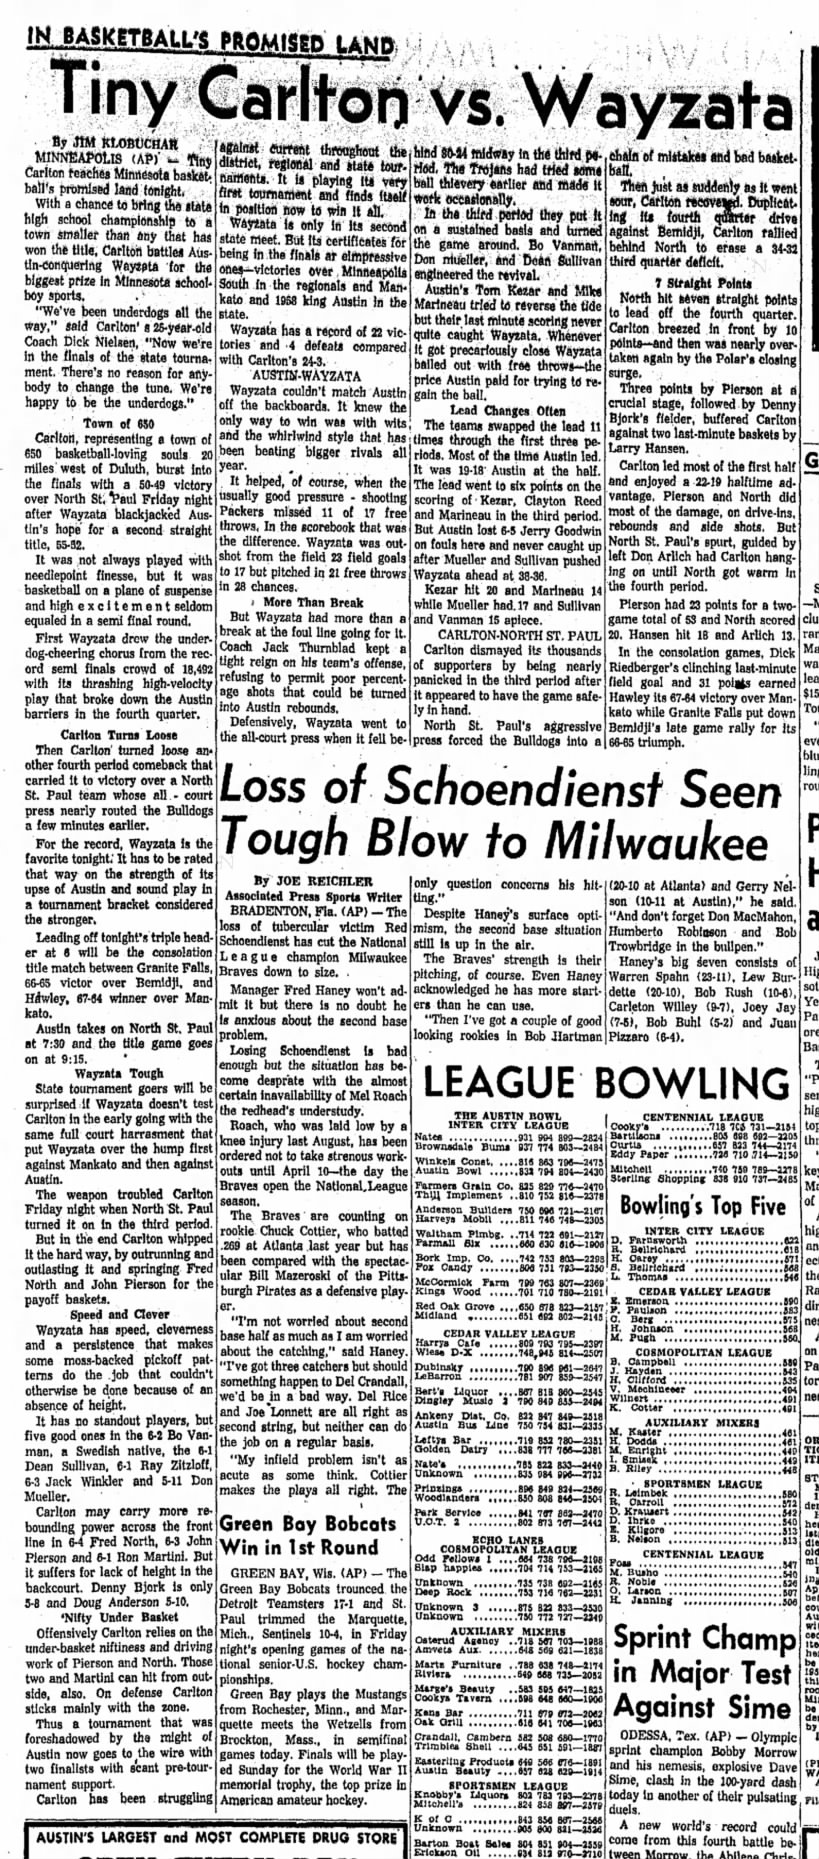 Austin Daily Herald, Austin, MN, March 21, 1959